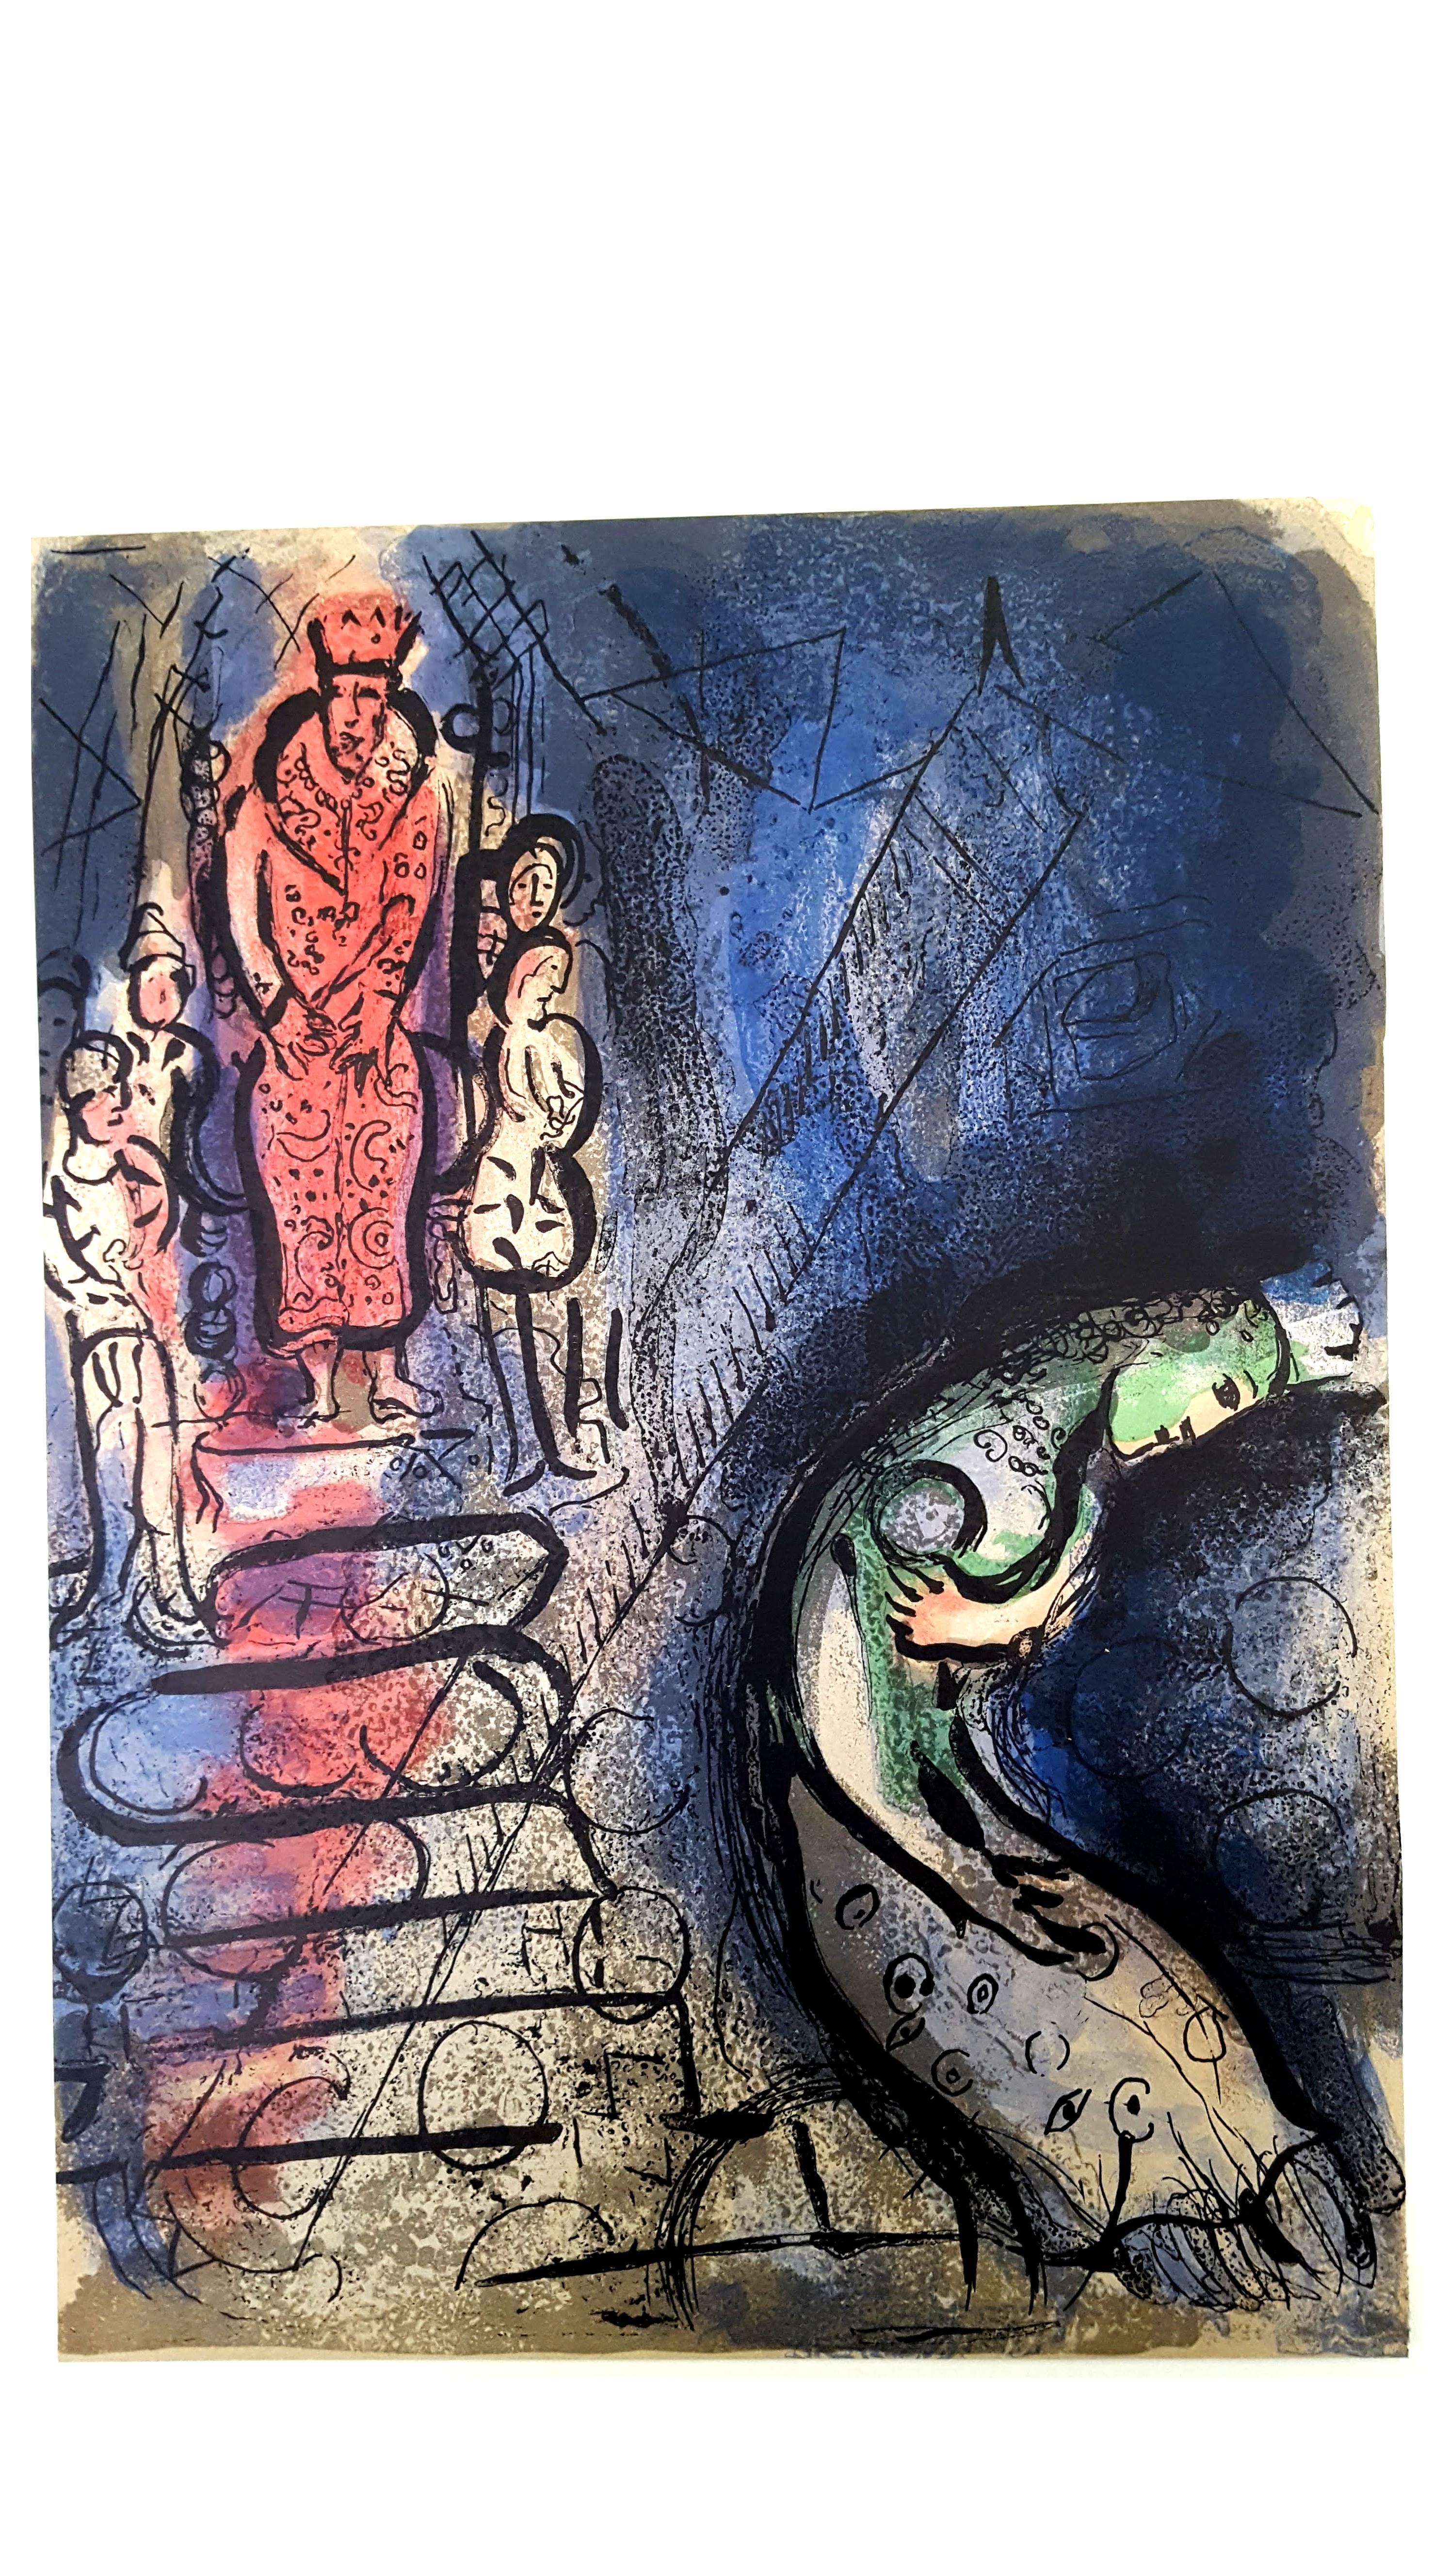 Marc Chagall - The Bible - Ahasuerus Sends Vasthi Away  - Original Lithograph